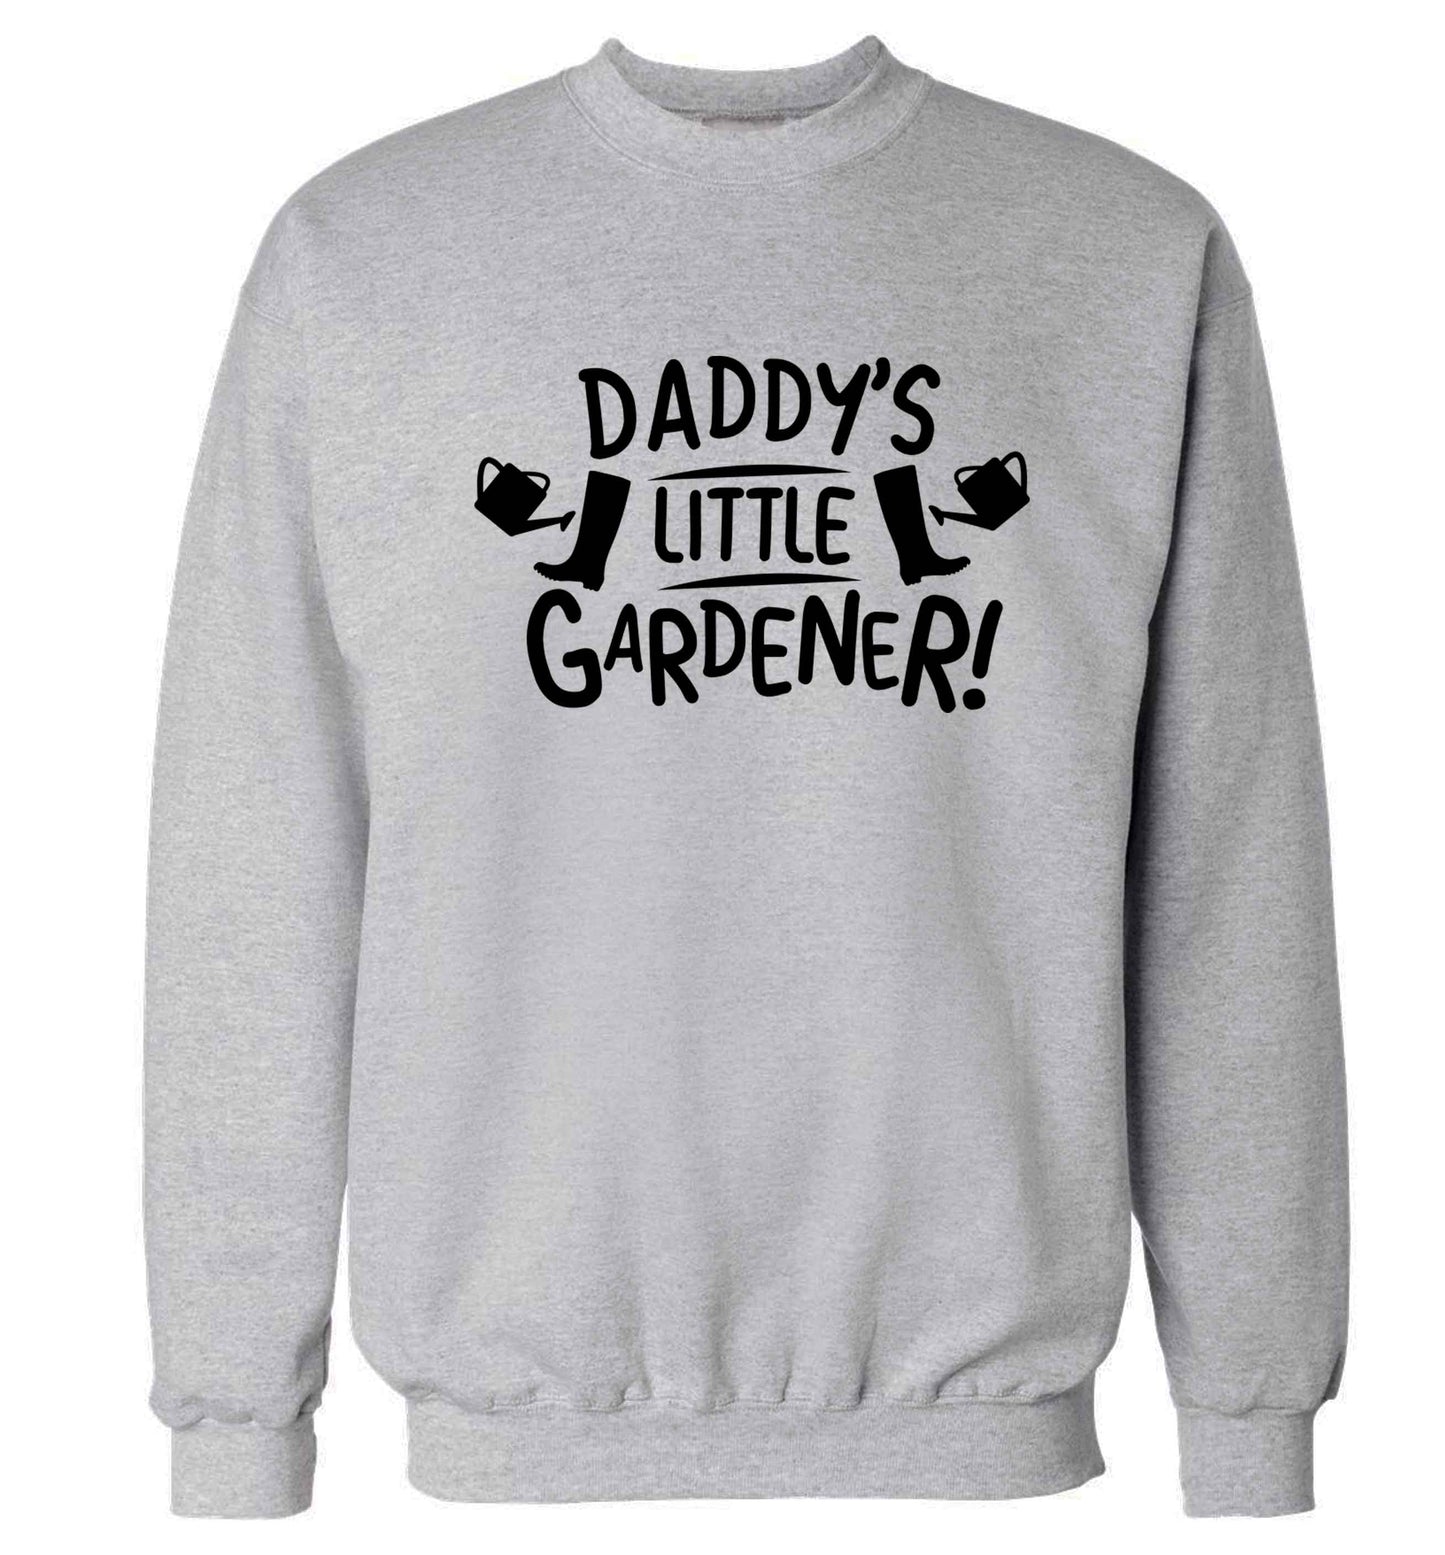 Daddy's little gardener Adult's unisex grey Sweater 2XL